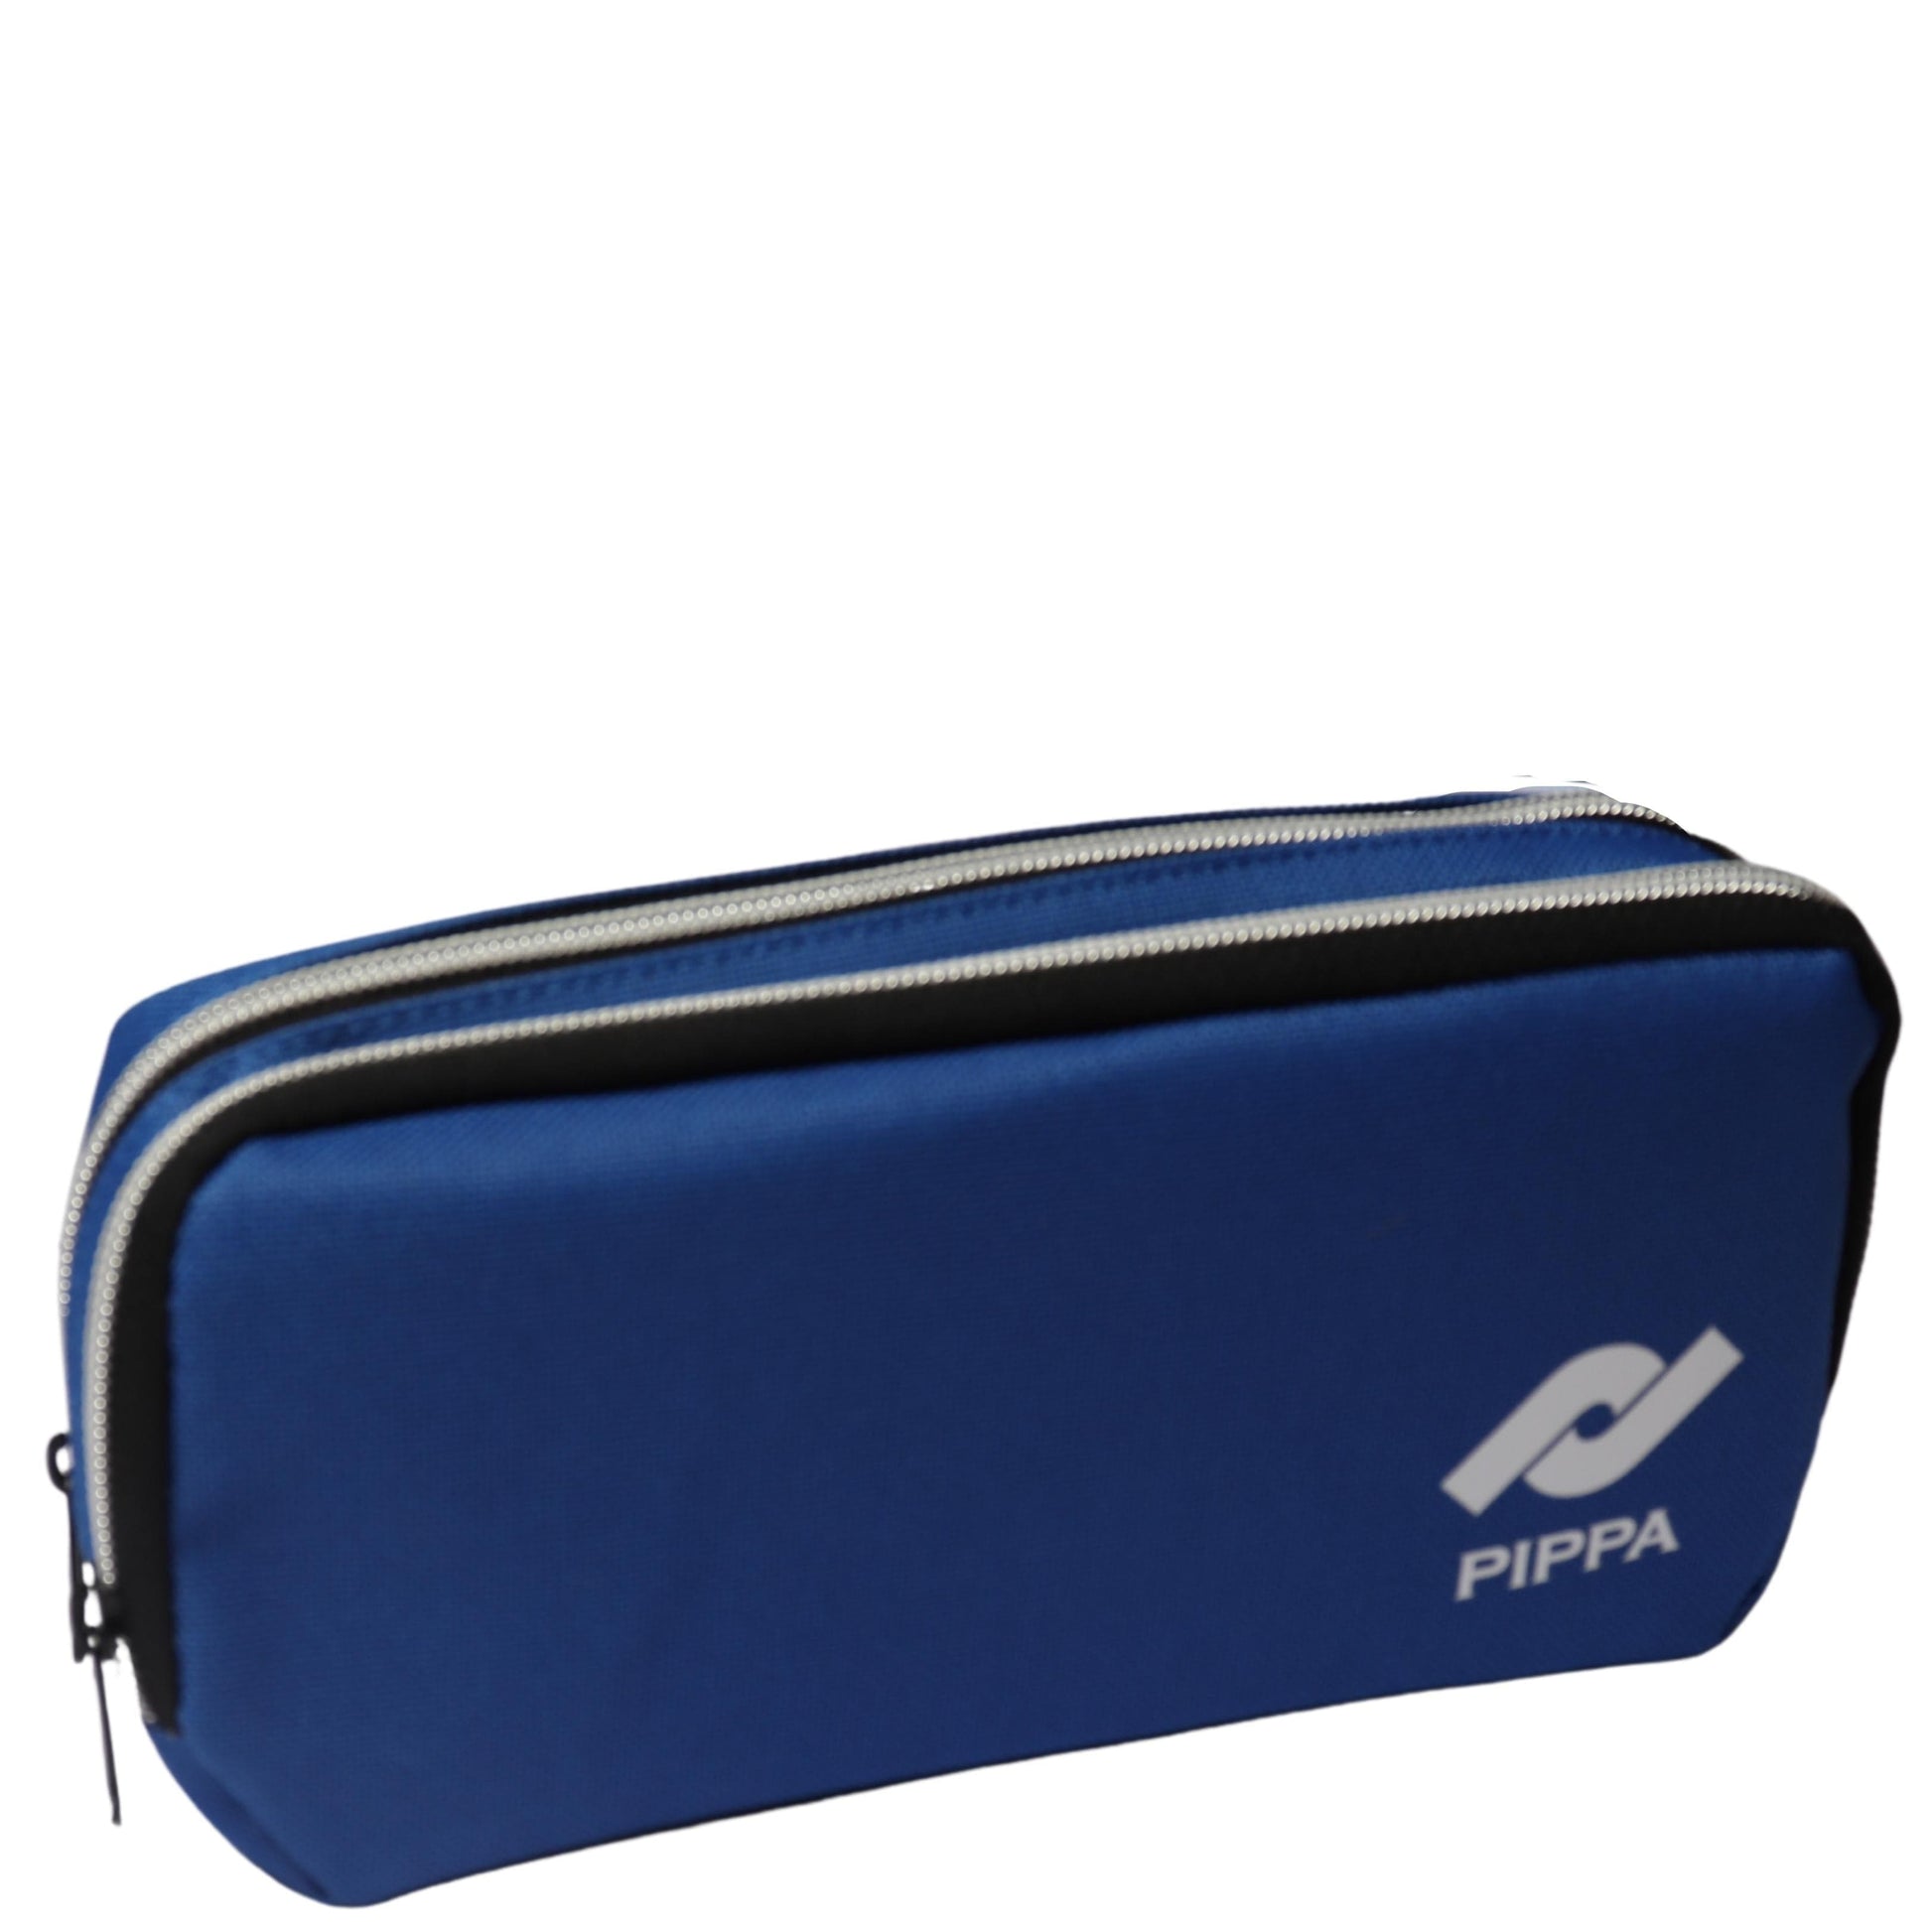 PIPPA School Bags & Supplies Blue PIPPA - Pencil Case 2 Zipper